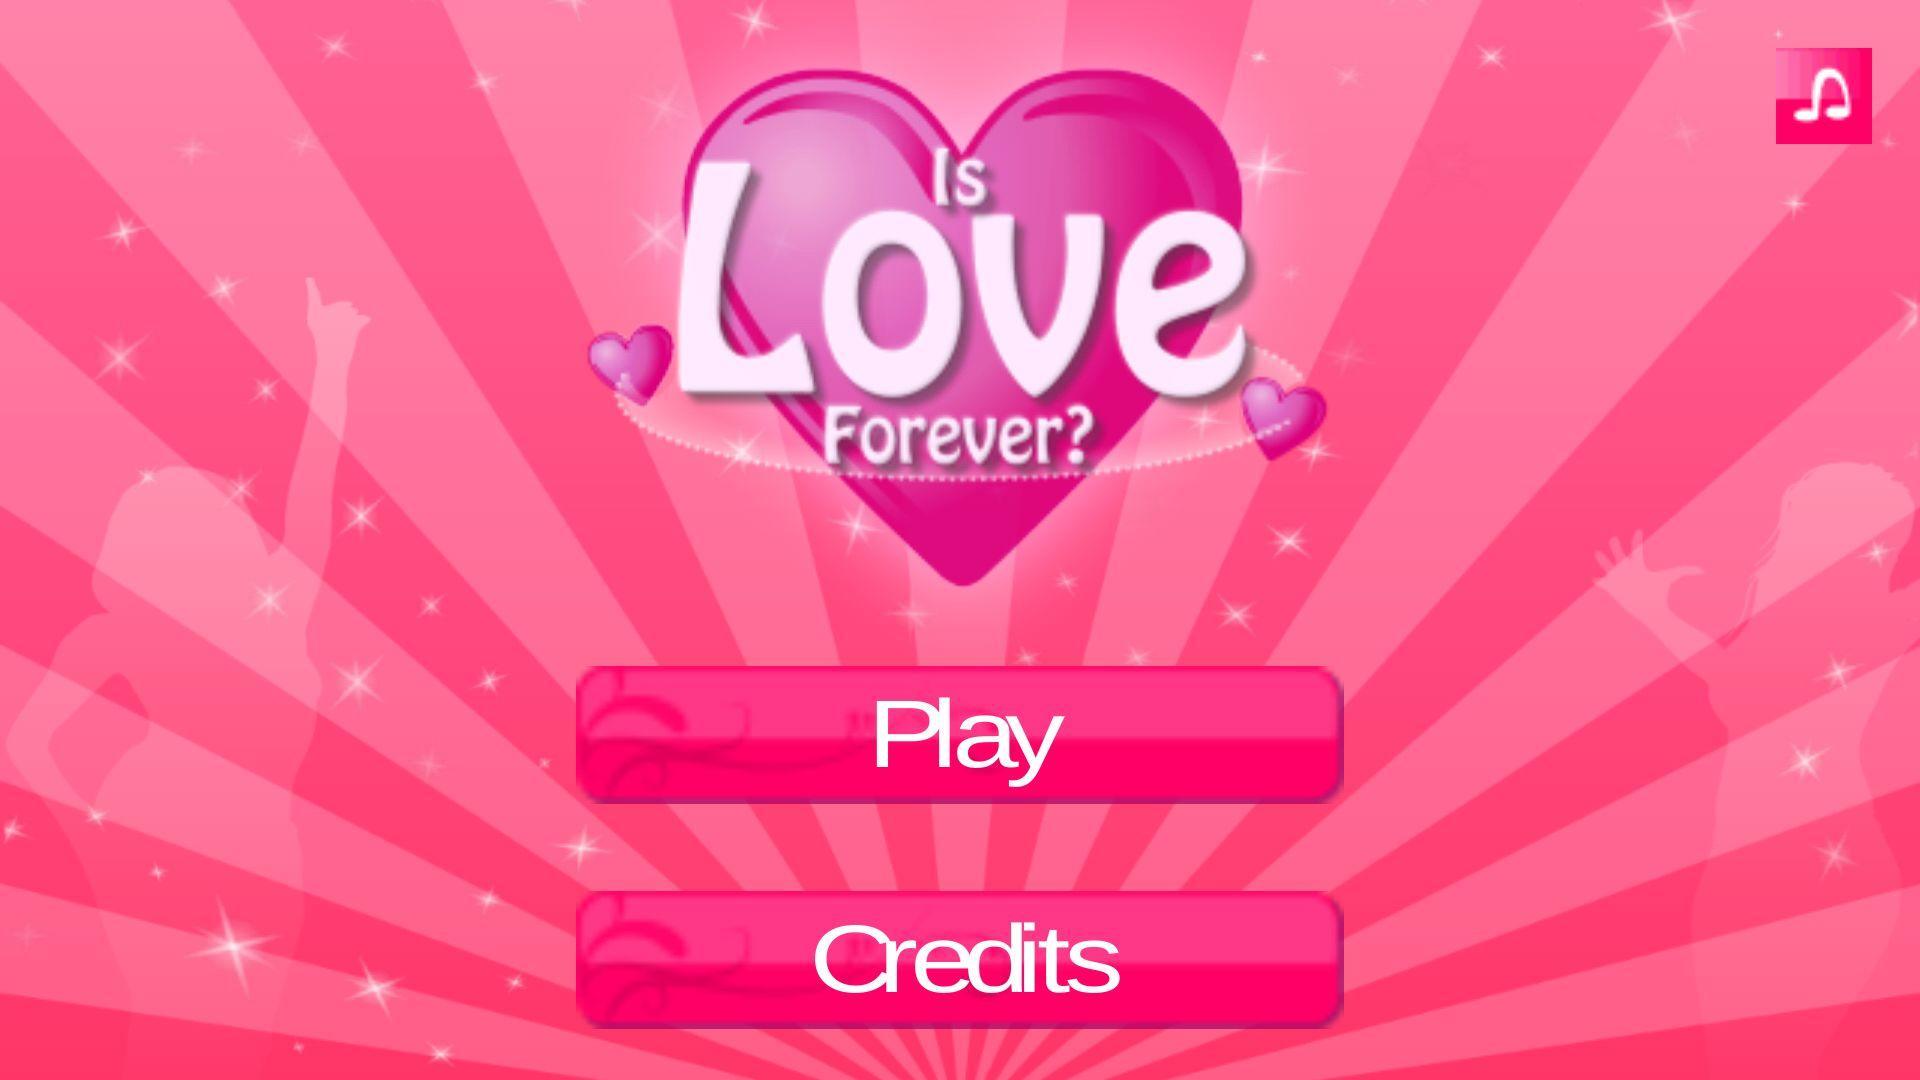 Плей Форевер. Love is Forever. Love is игра что за игра. Love is Forever mp3. First love игра